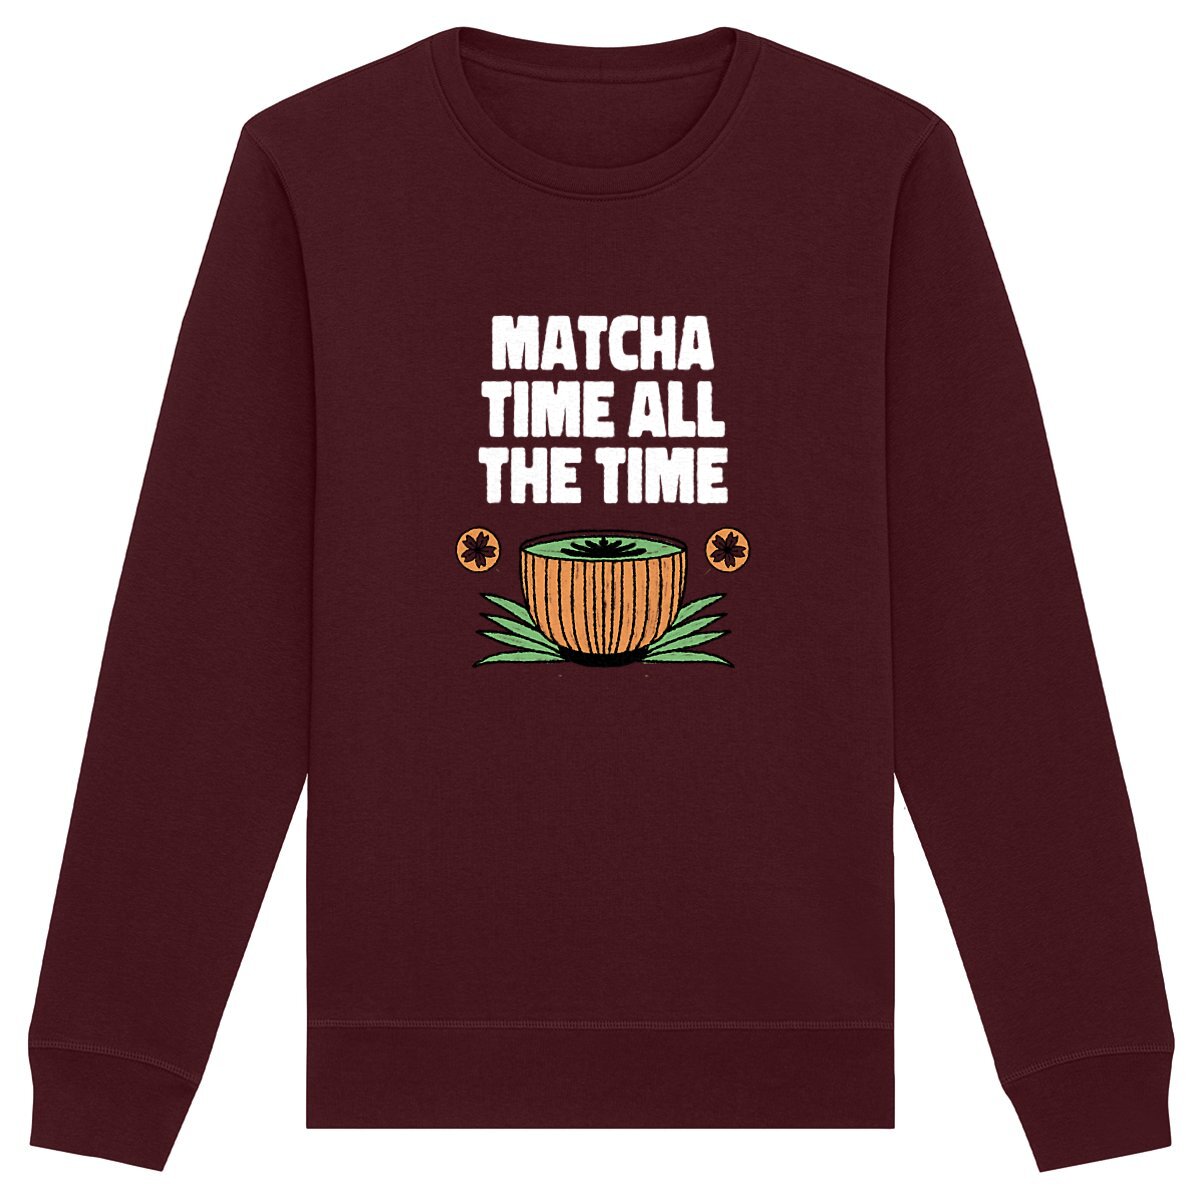 Matcha time all the time - Organic Sweatshirt